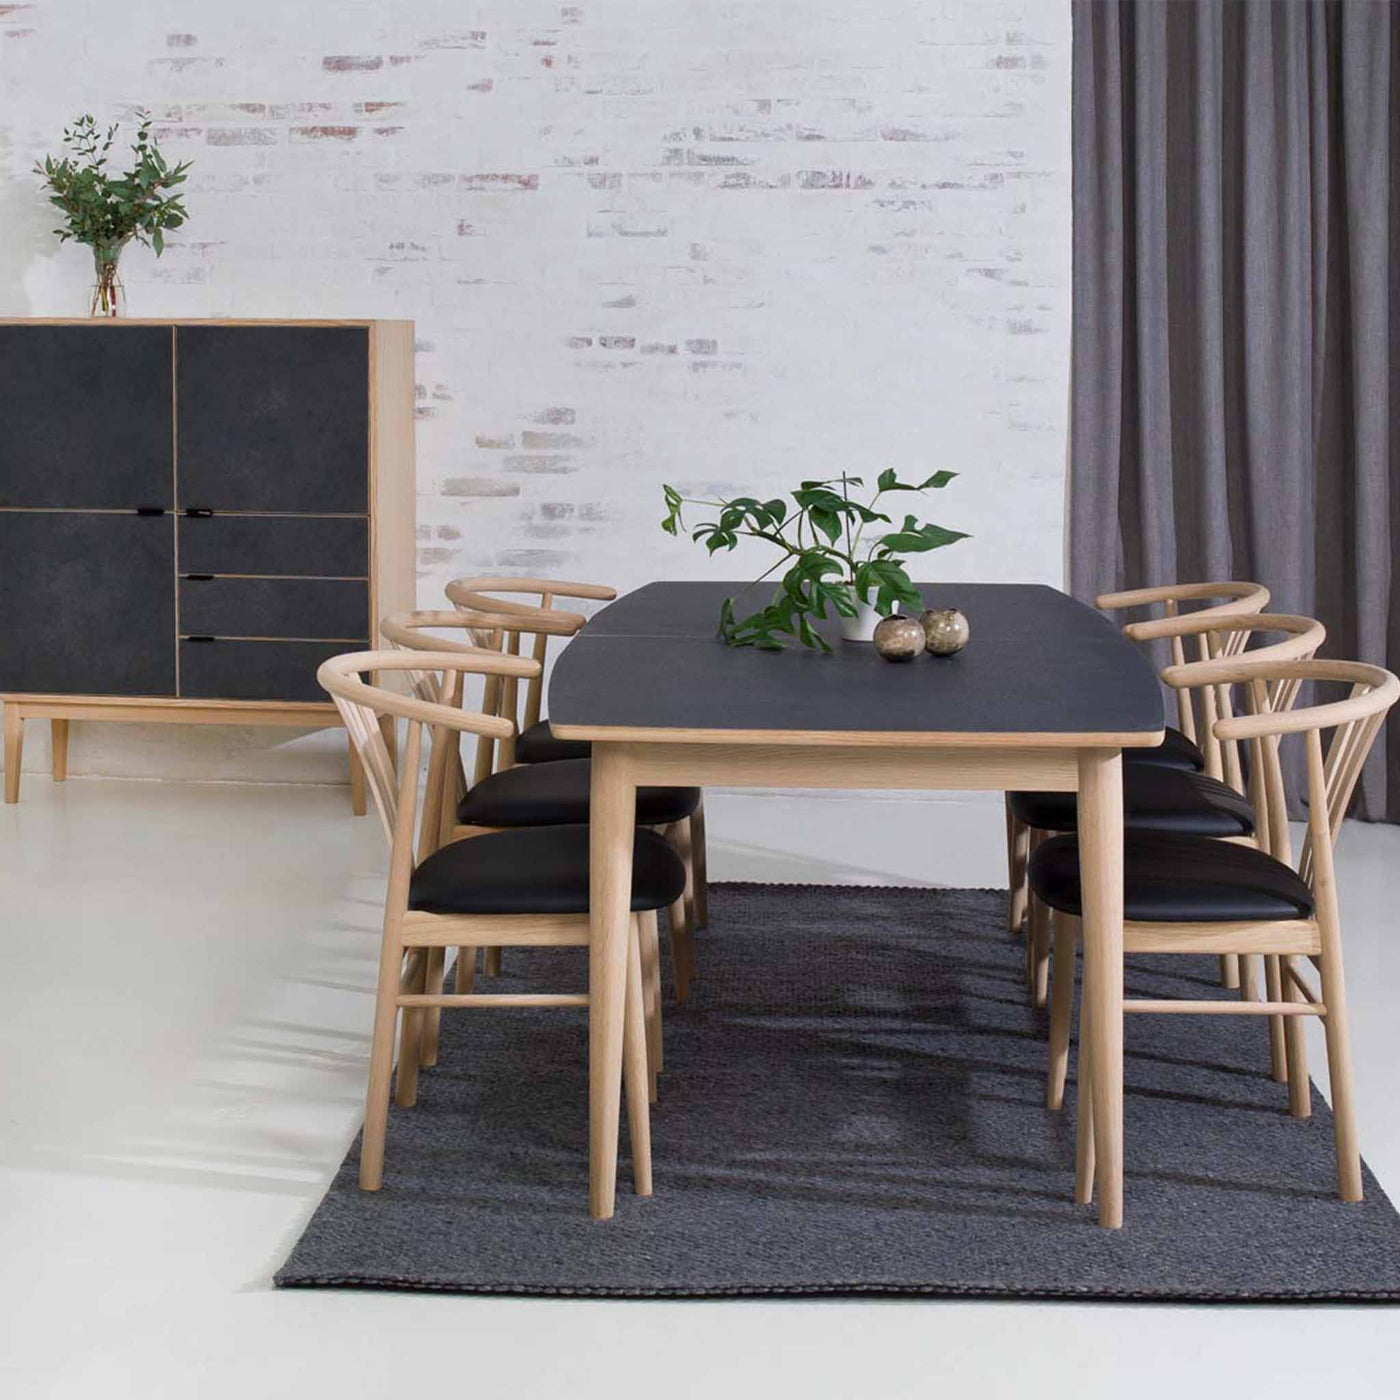 Svane Design bårdformet idyl spisebord med bordplade i stone look laminat og ben i ubehandlet eg.